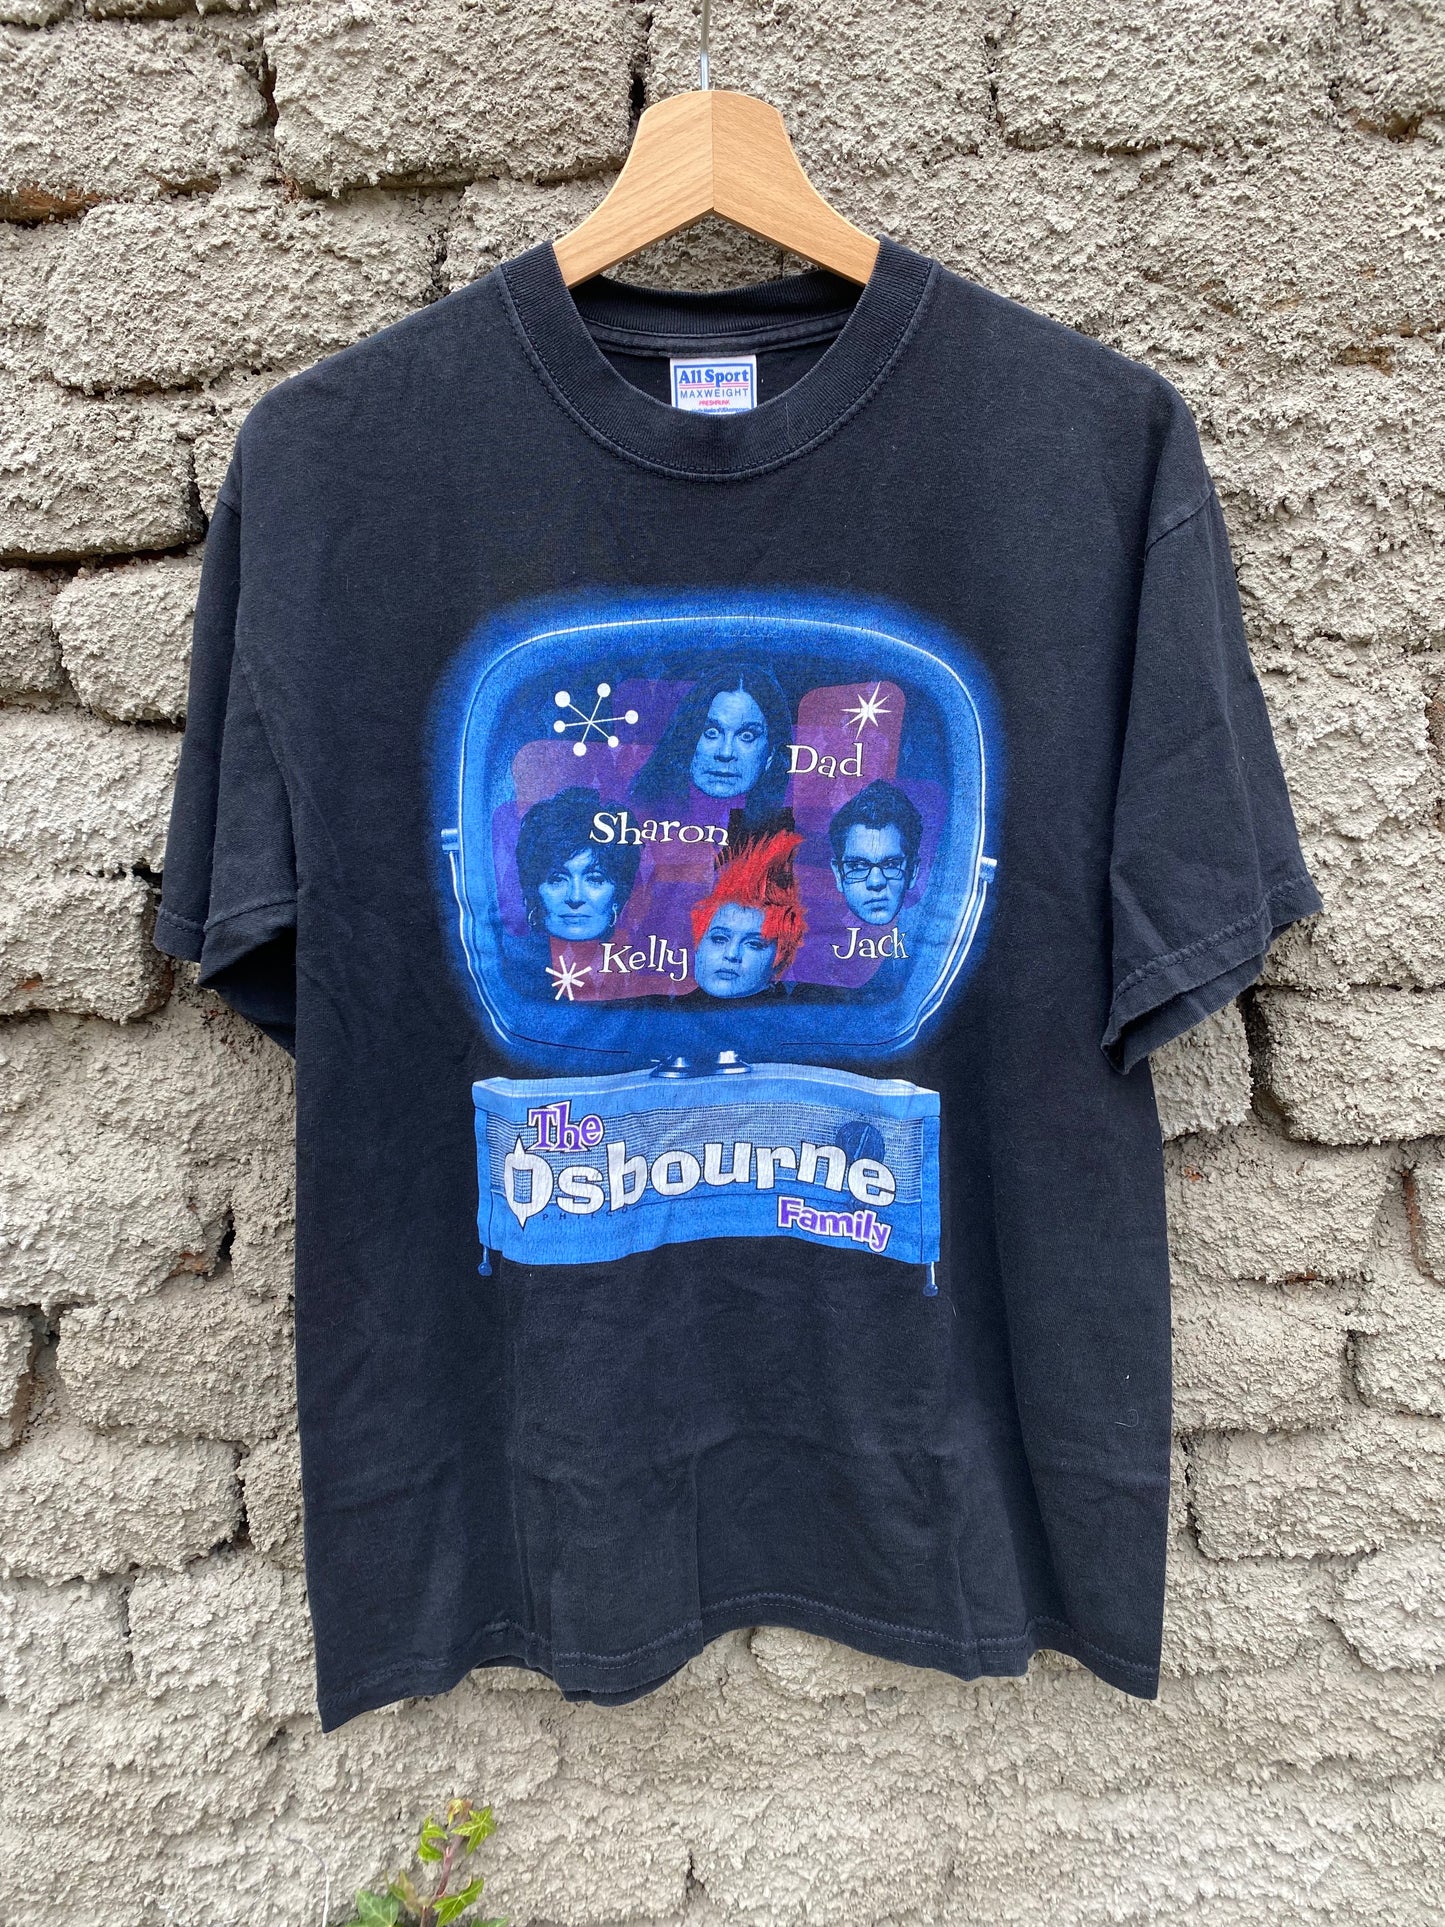 Vintage the Osbourne Family t-shirt - size M